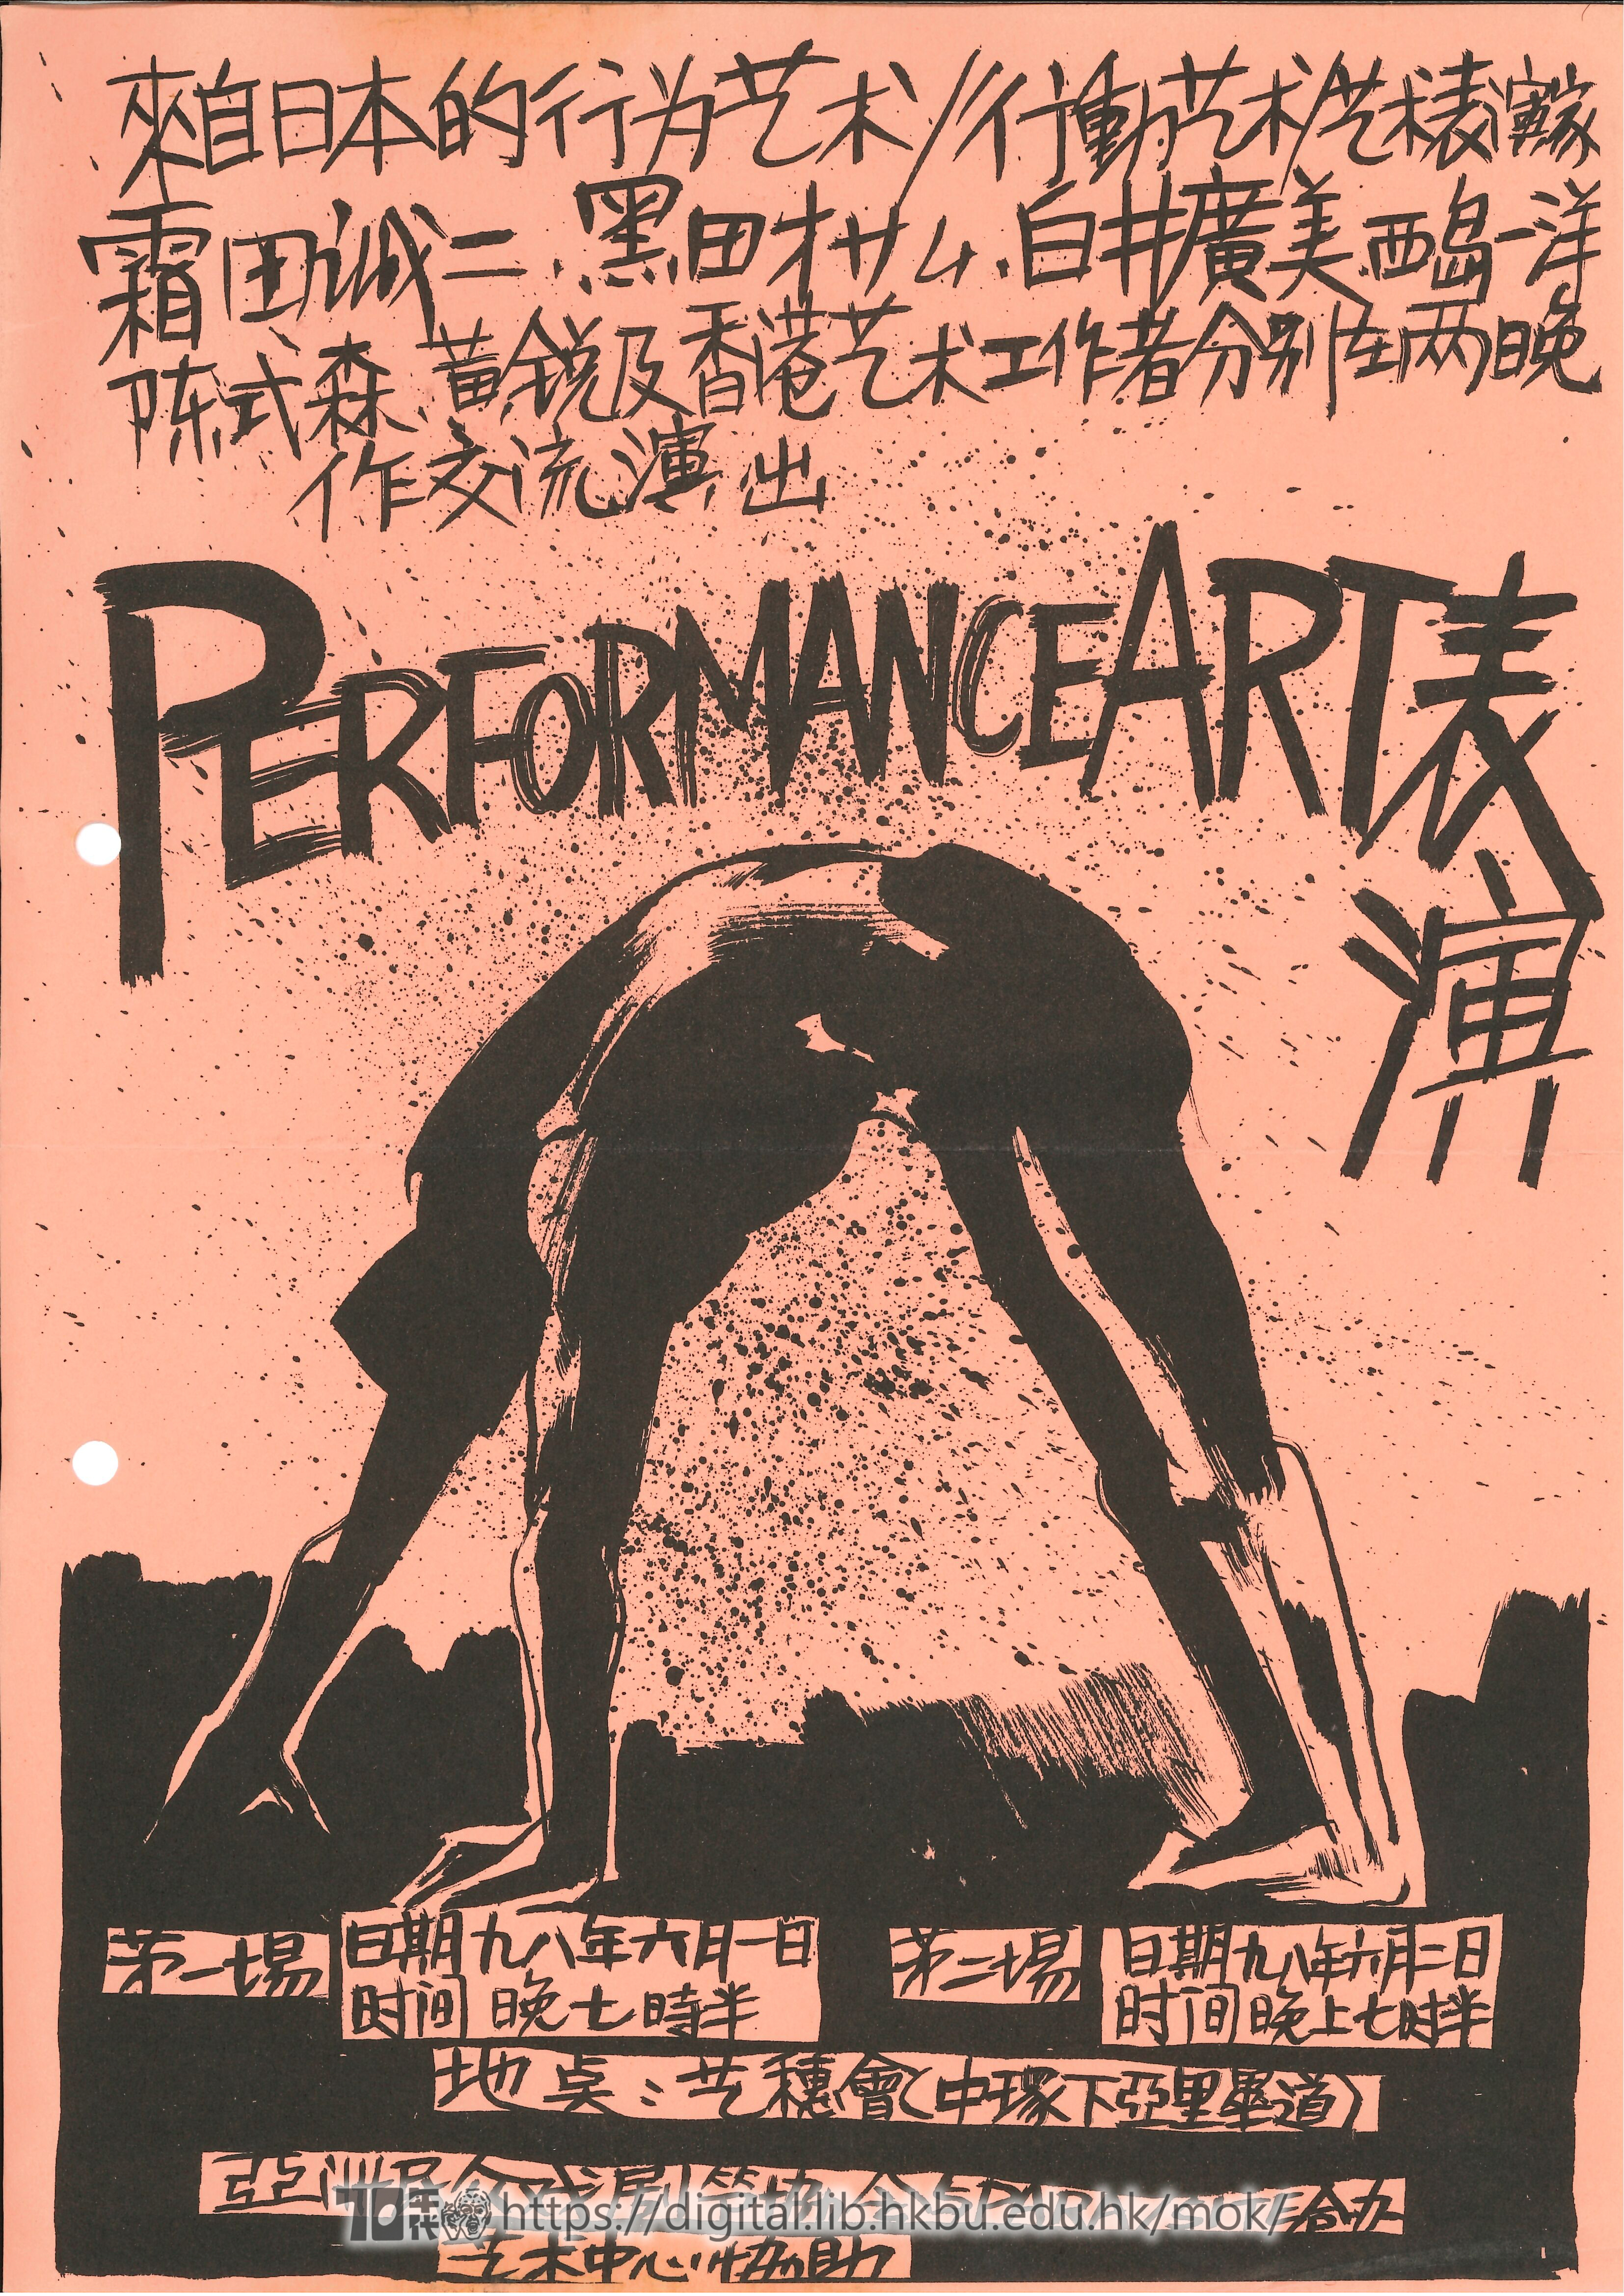 Performance Art  Poster of Japan/China performance art exchange  